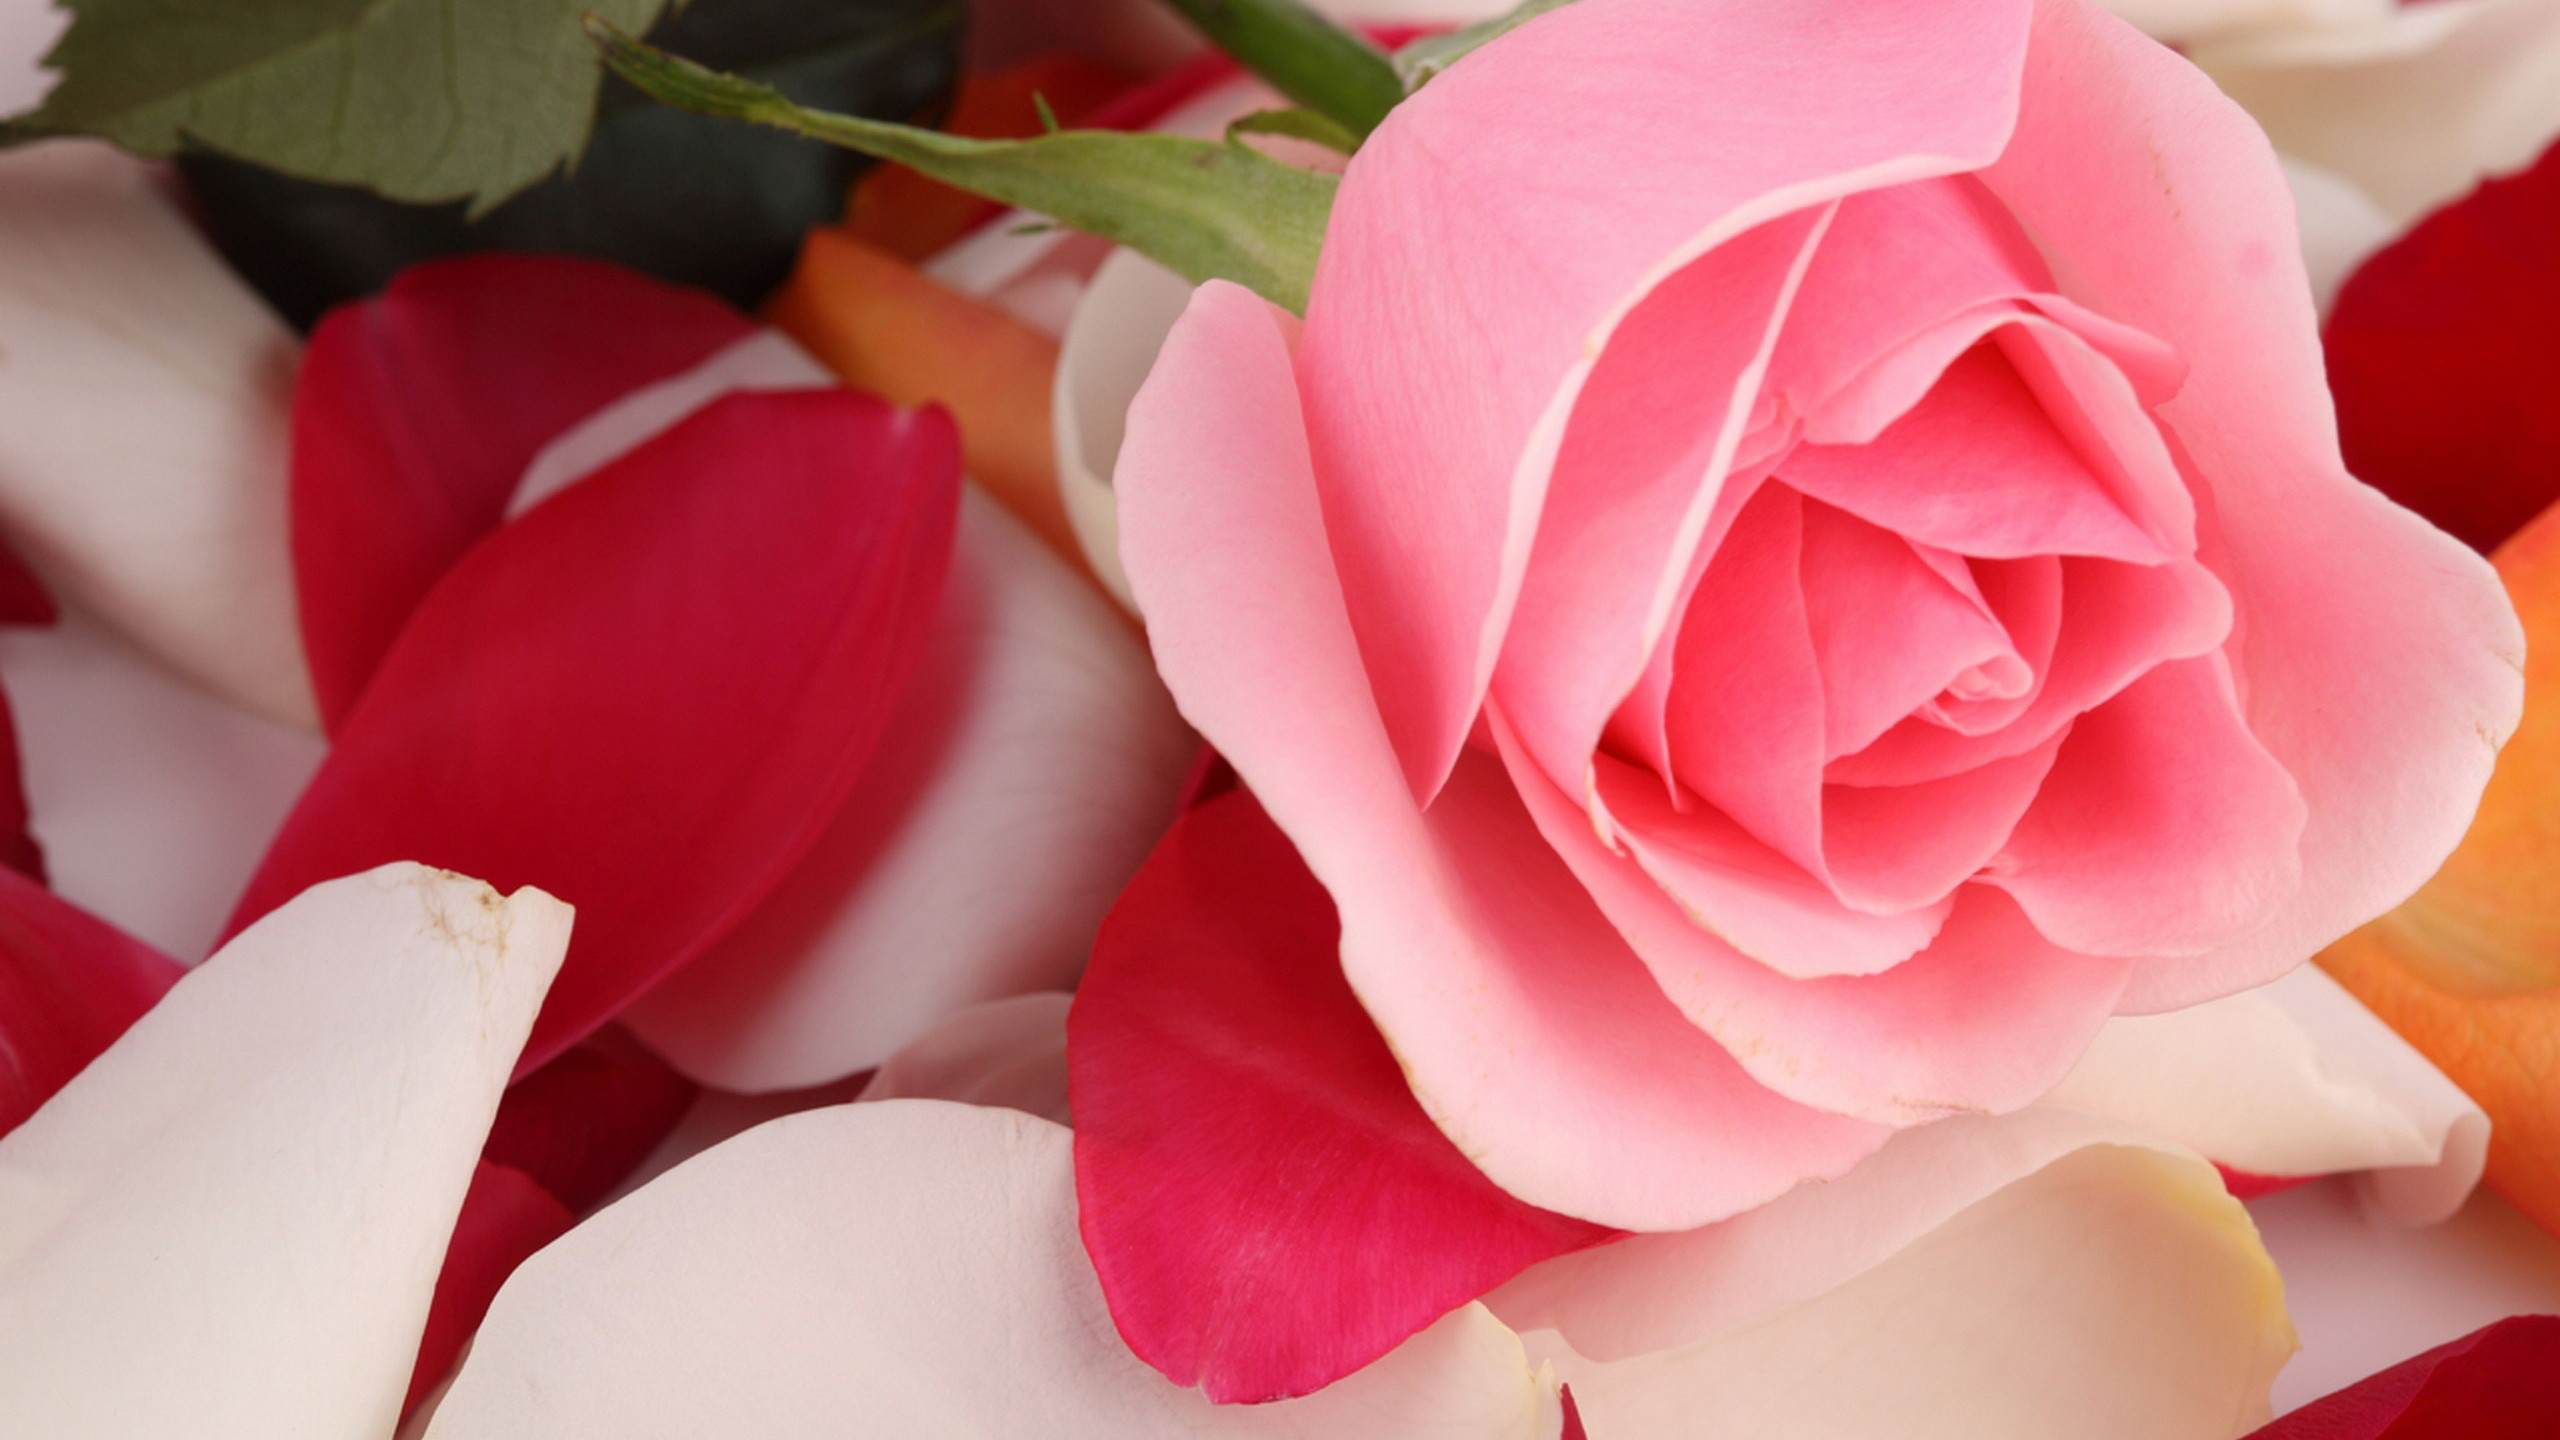 Download 2560x1440 Wallpaper Beautiful Pink Rose Flower, Dual Wide, Widescreen  16:9, Widescreen, 2560x1440 Hd Image, Background, 4560